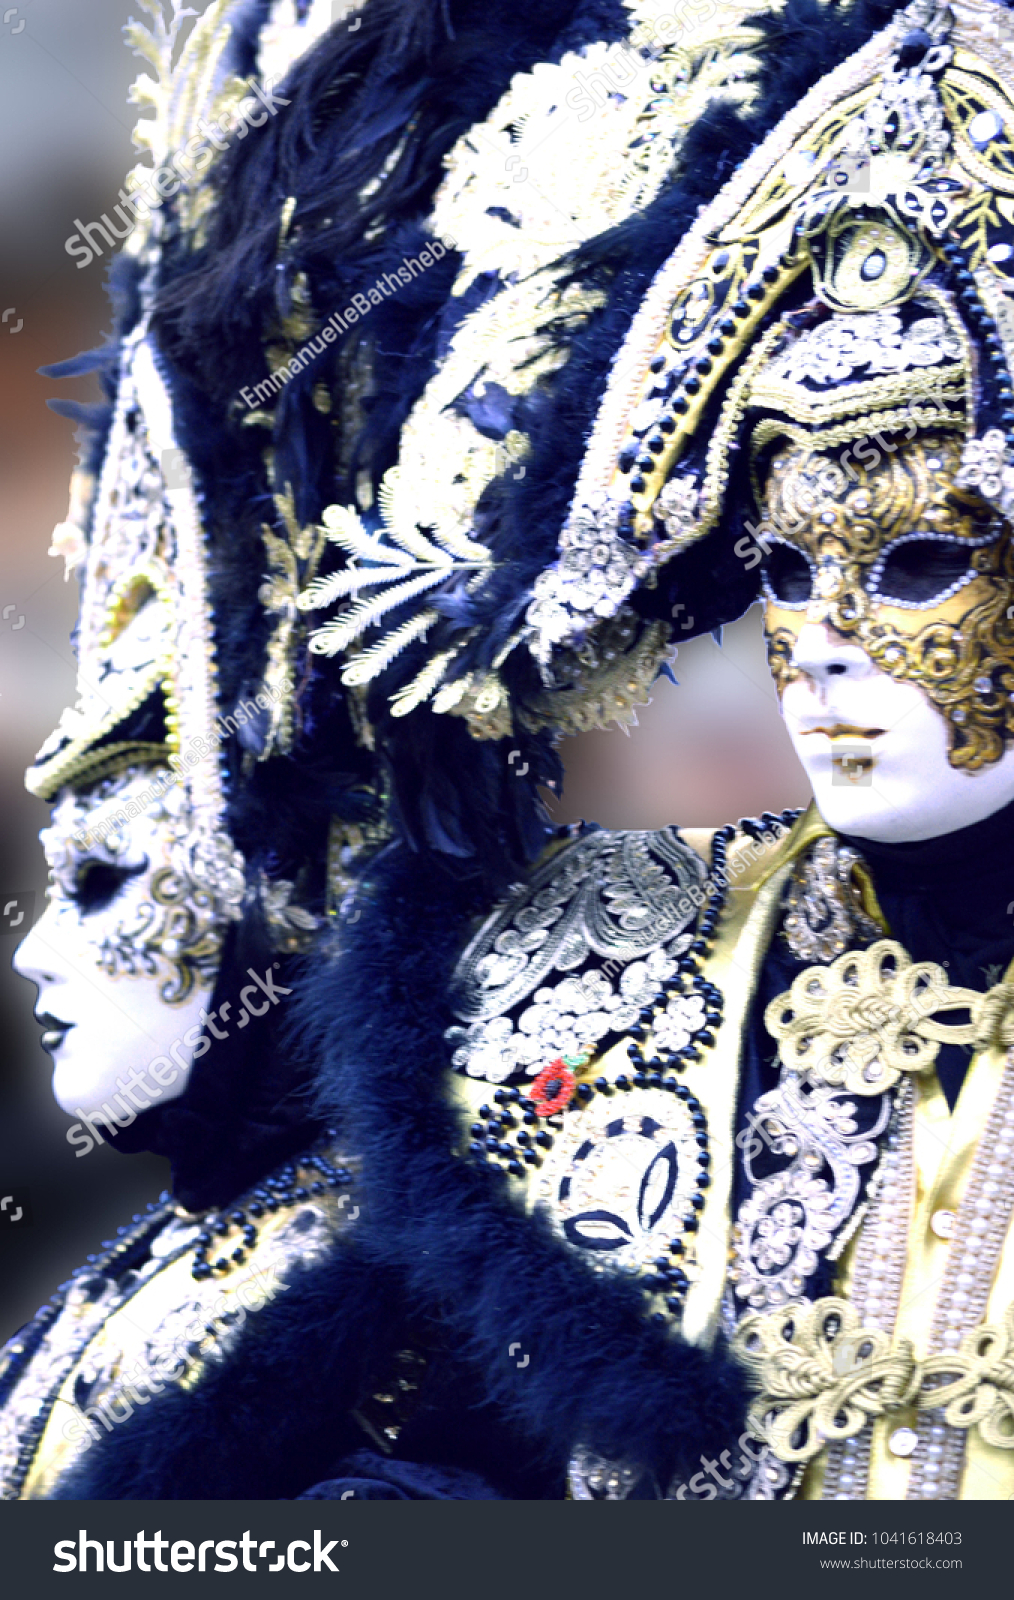 Black and Gold Venetian Masks #1041618403